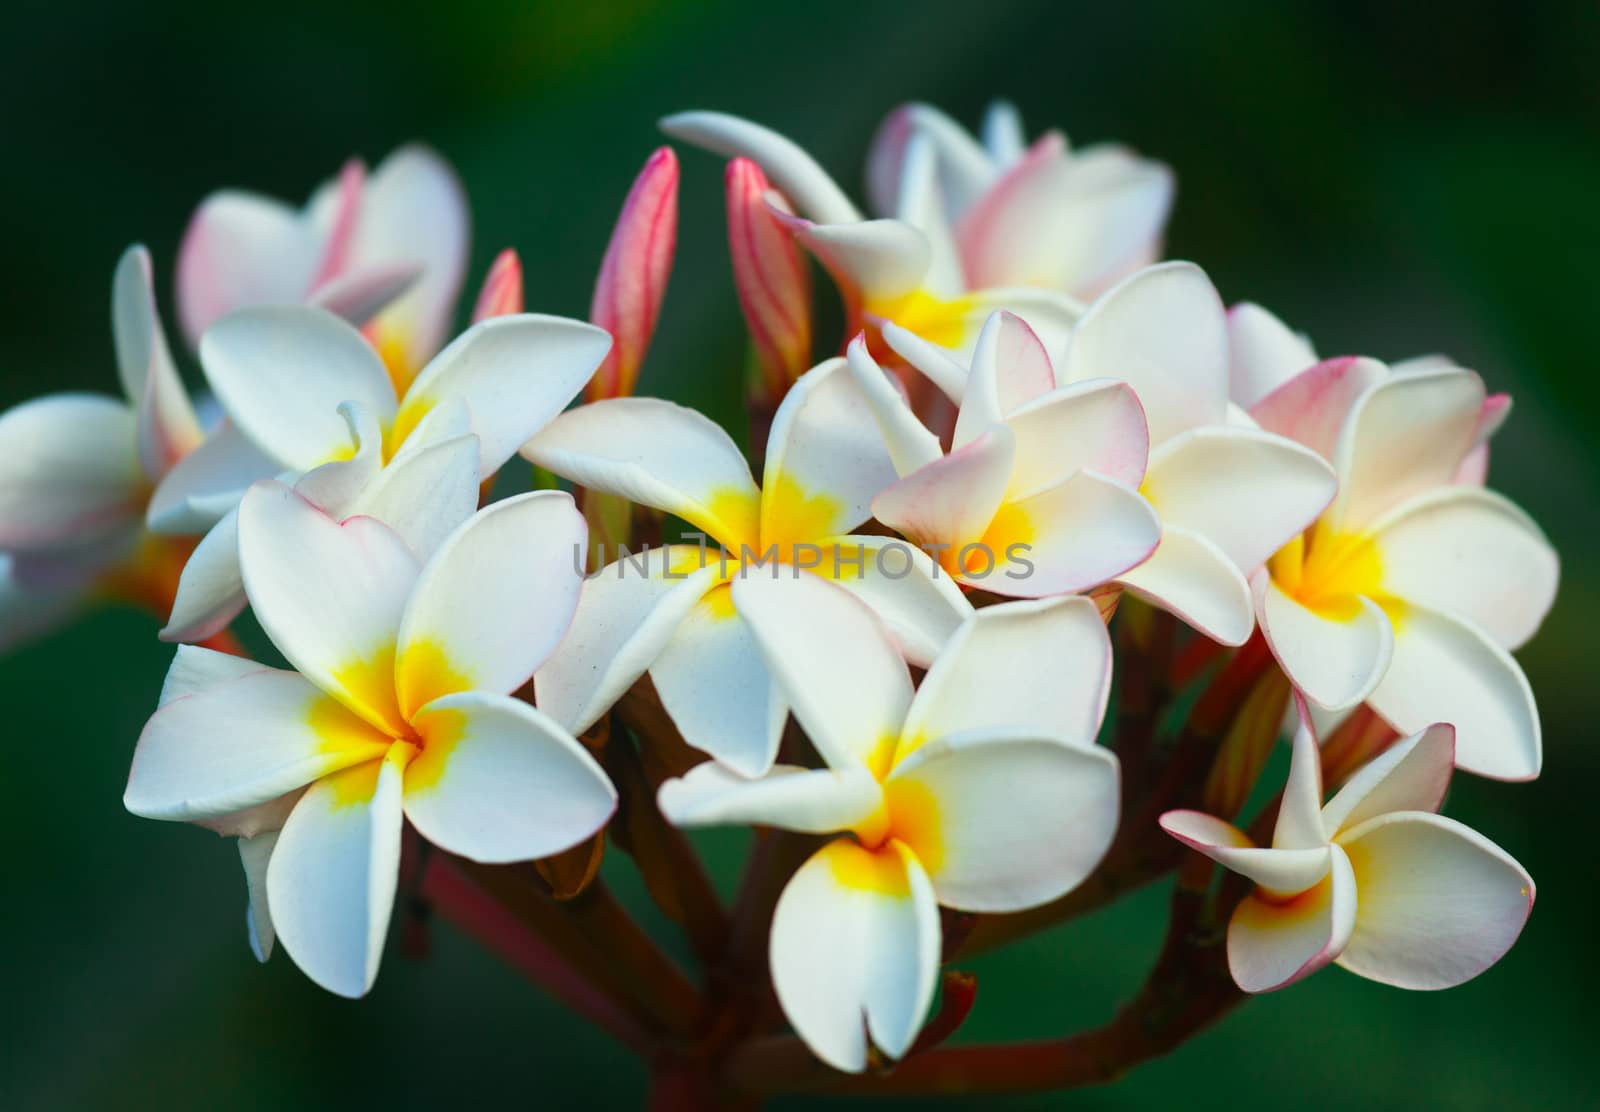 A cluster of beautiful frangipani flowers.